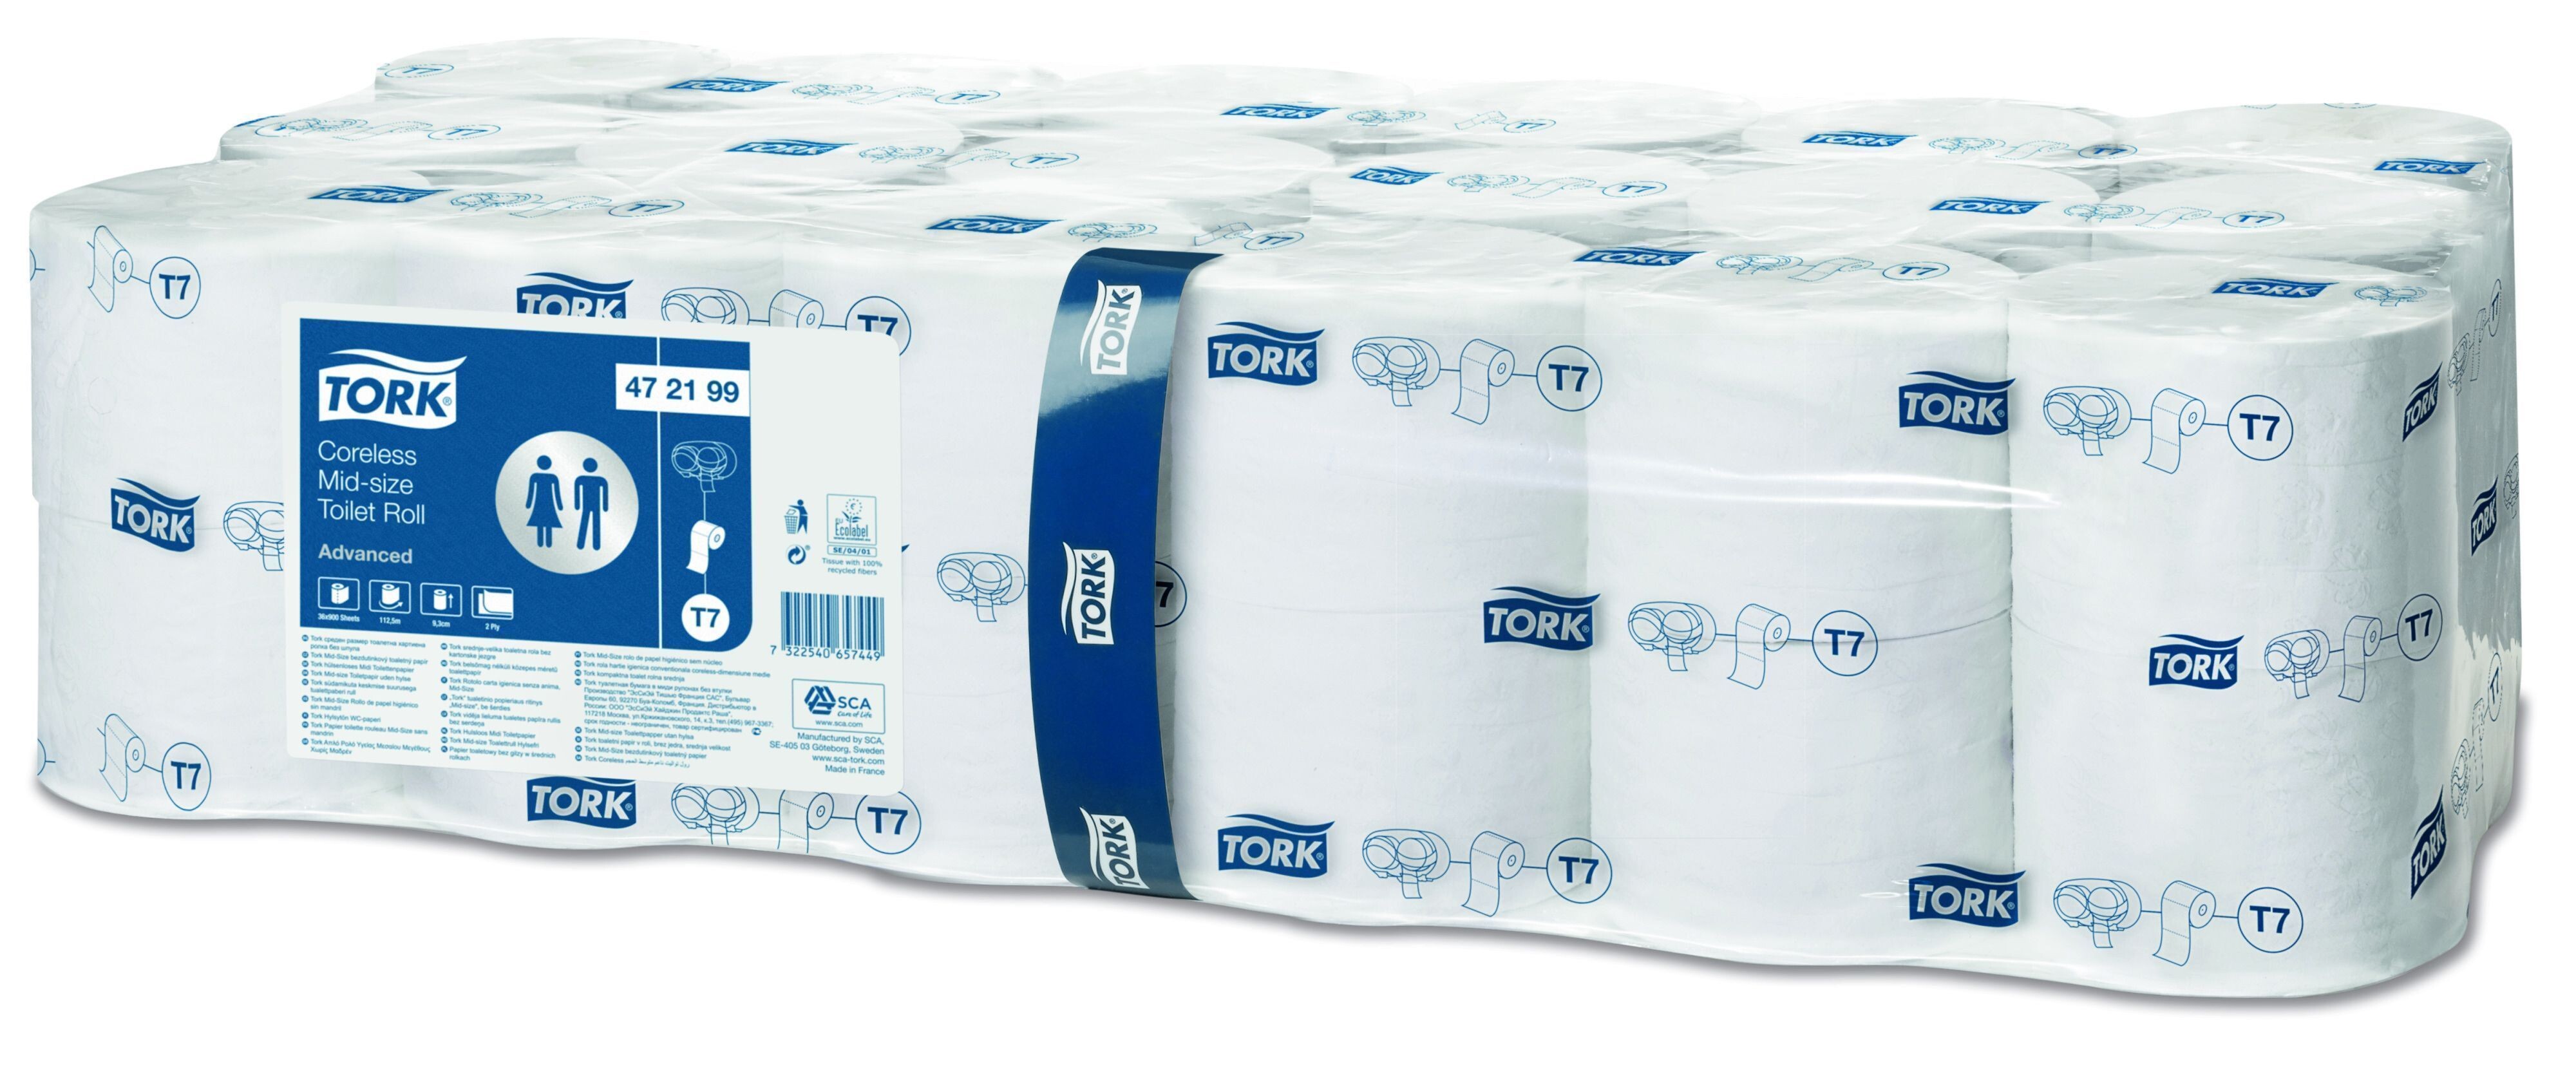 TORK toiletpapier 2-laags 36rol 900vel T7 wit 472199